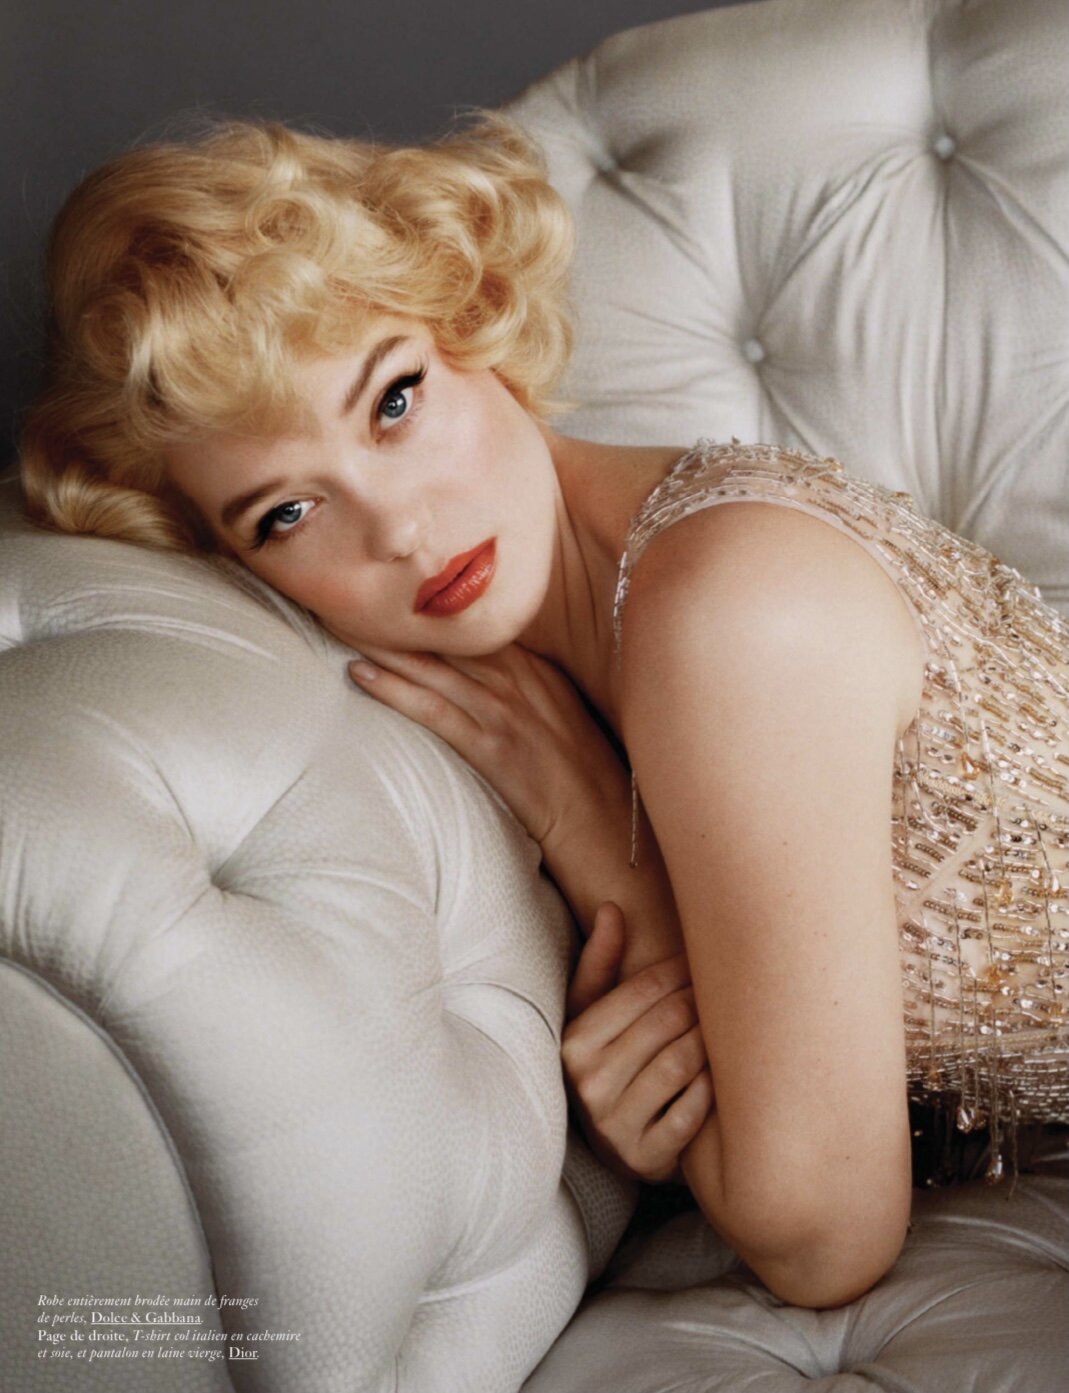 Bond girl Lea Seydoux recreates Marilyn Monroe shoots for Louis